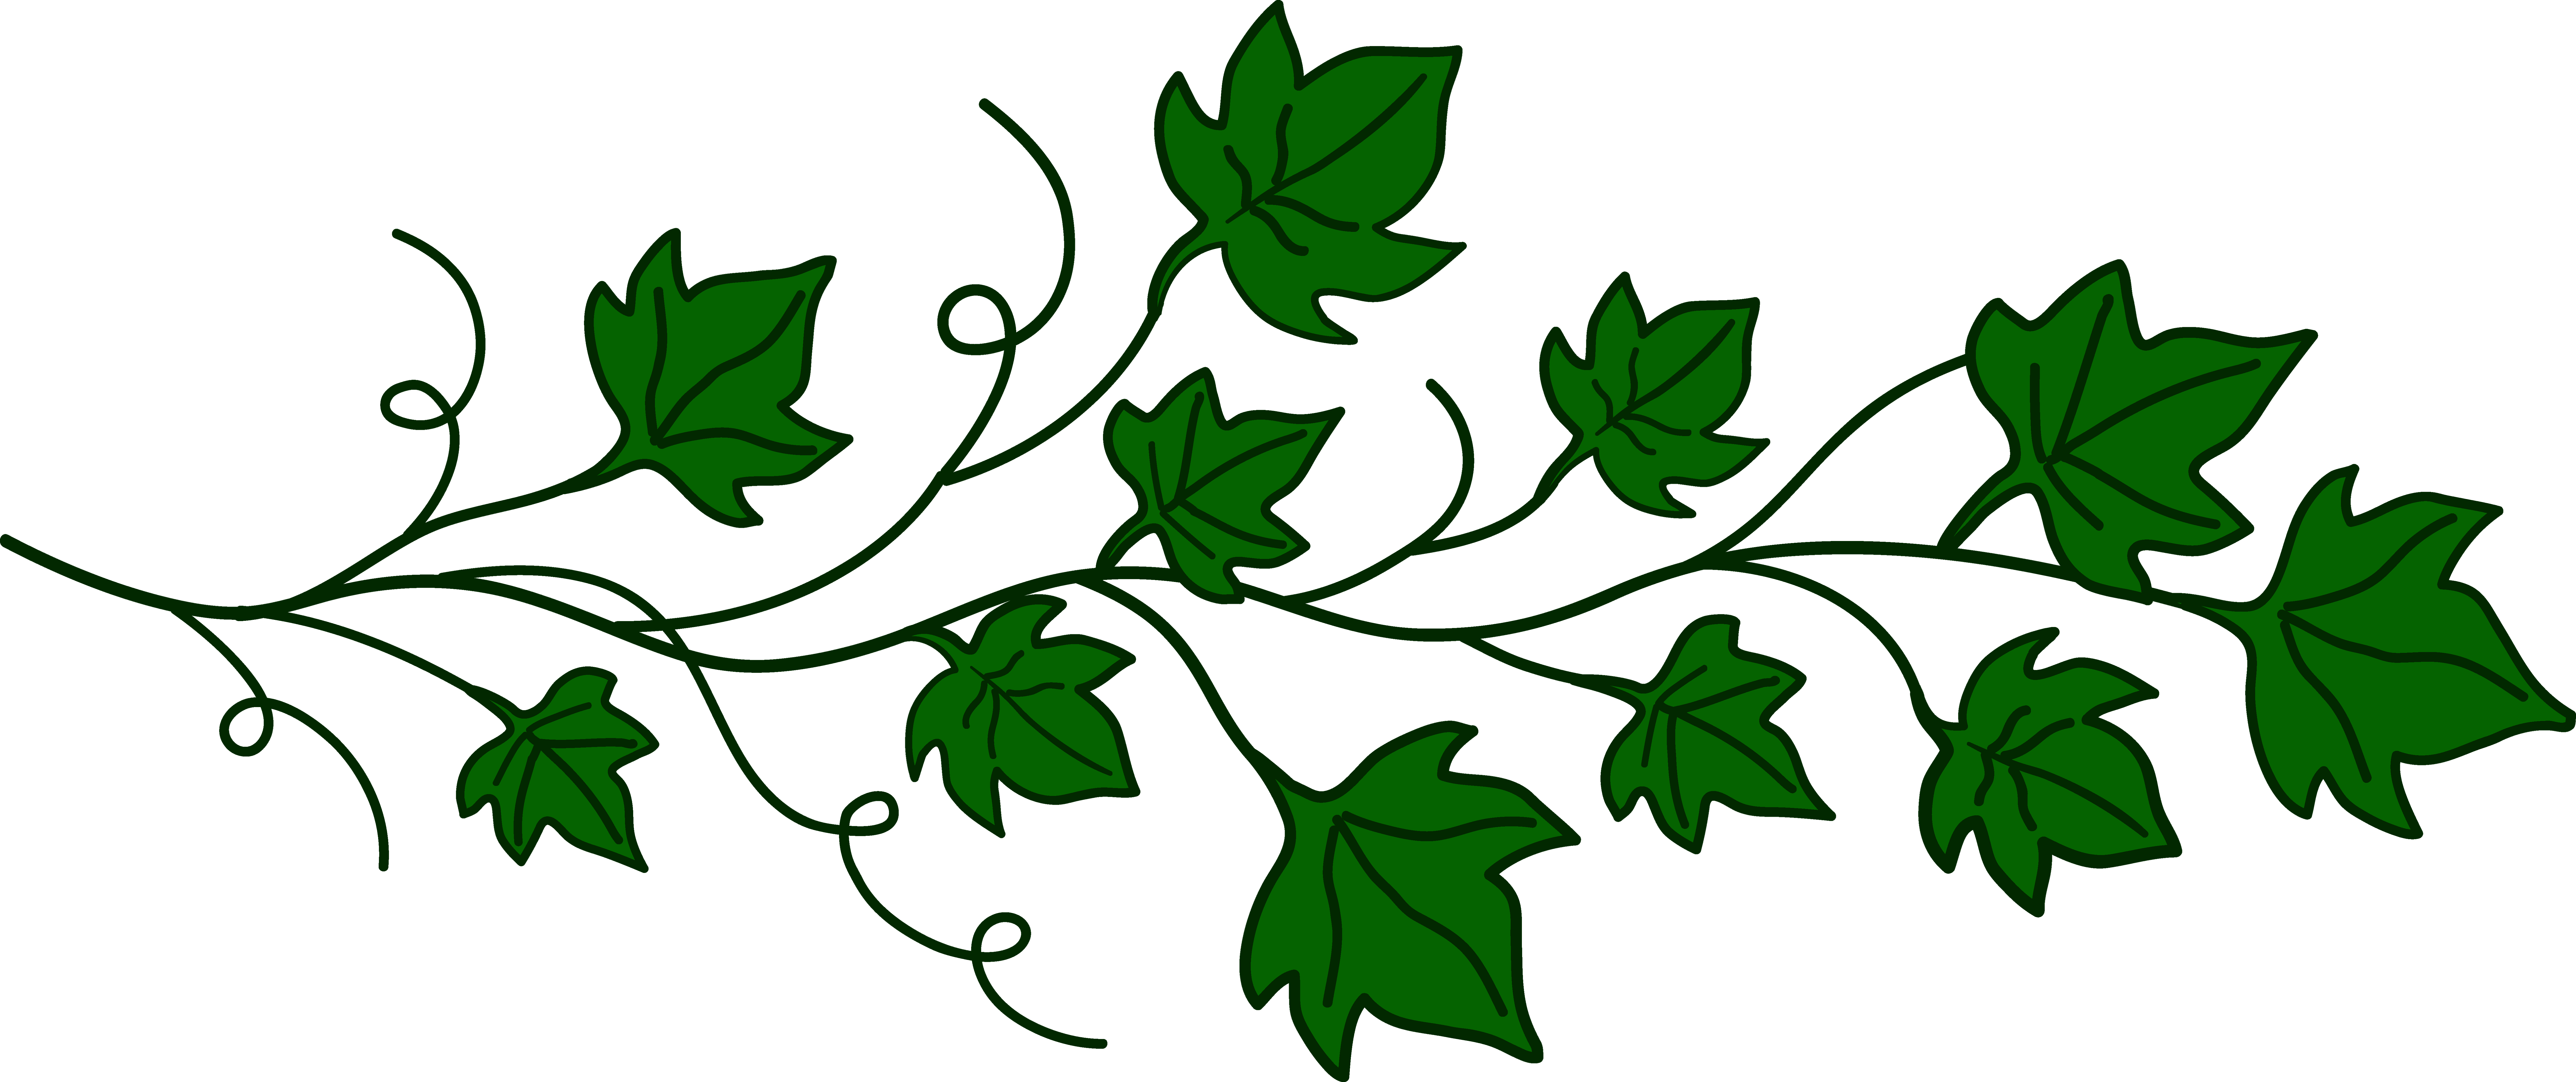 leaf design clip art - photo #7